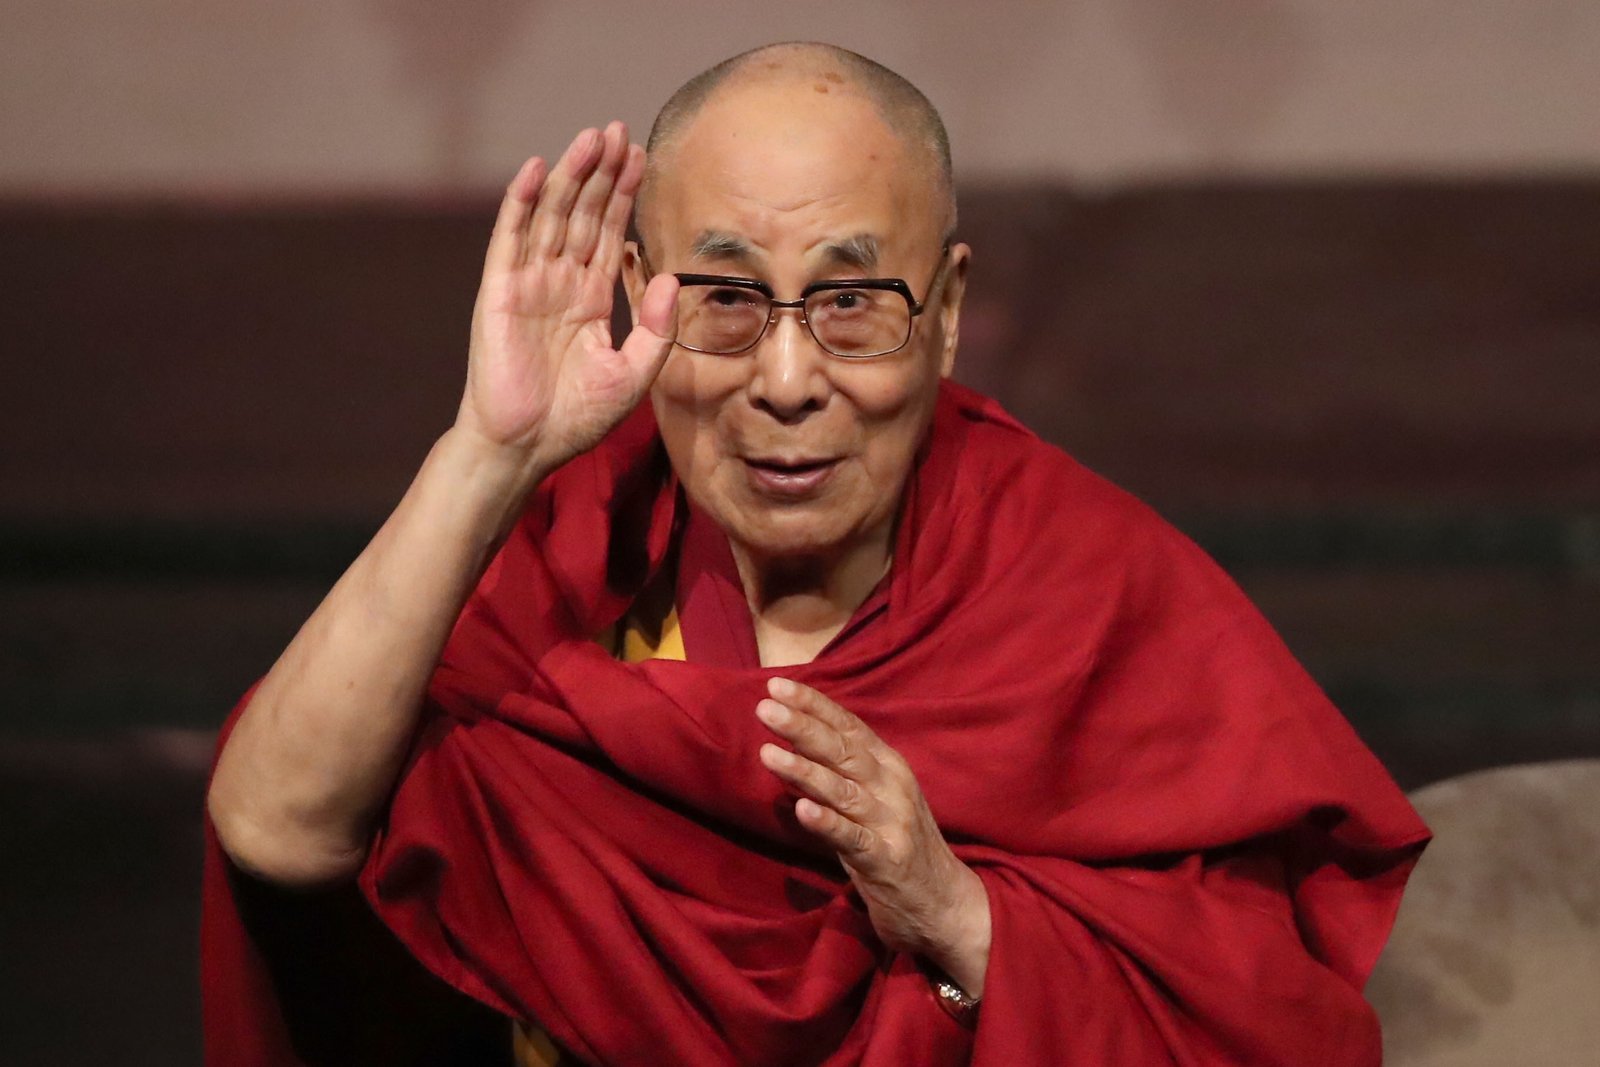 Dalai Lama To Celebrate 85th Birthday With First Album